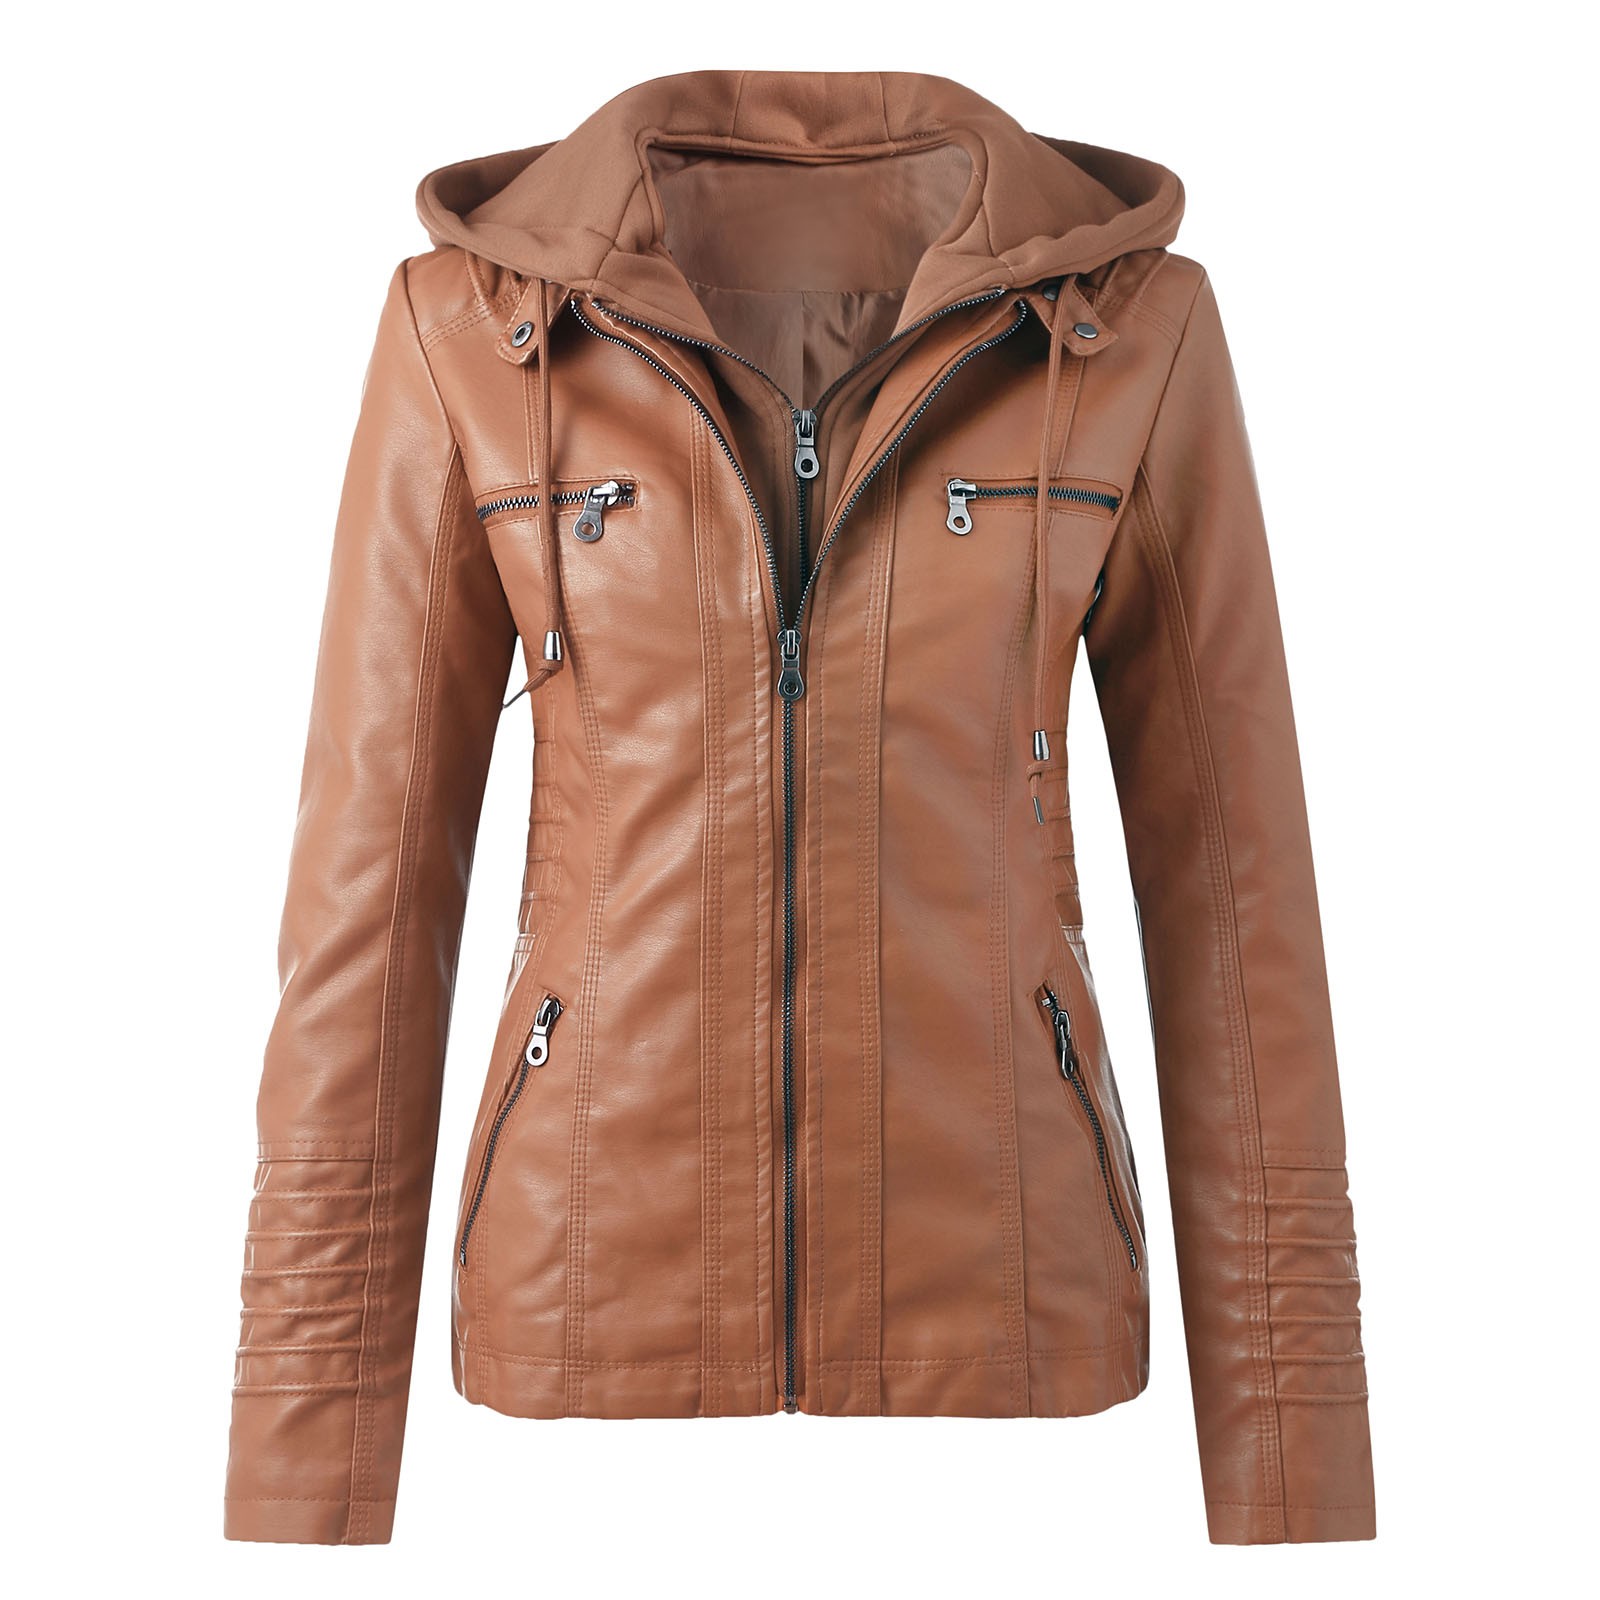 EQWLJWE Women's Slim Leather Stand Collar Zip Motorcycle Suit Belt Coat Jacket Tops - image 1 of 5